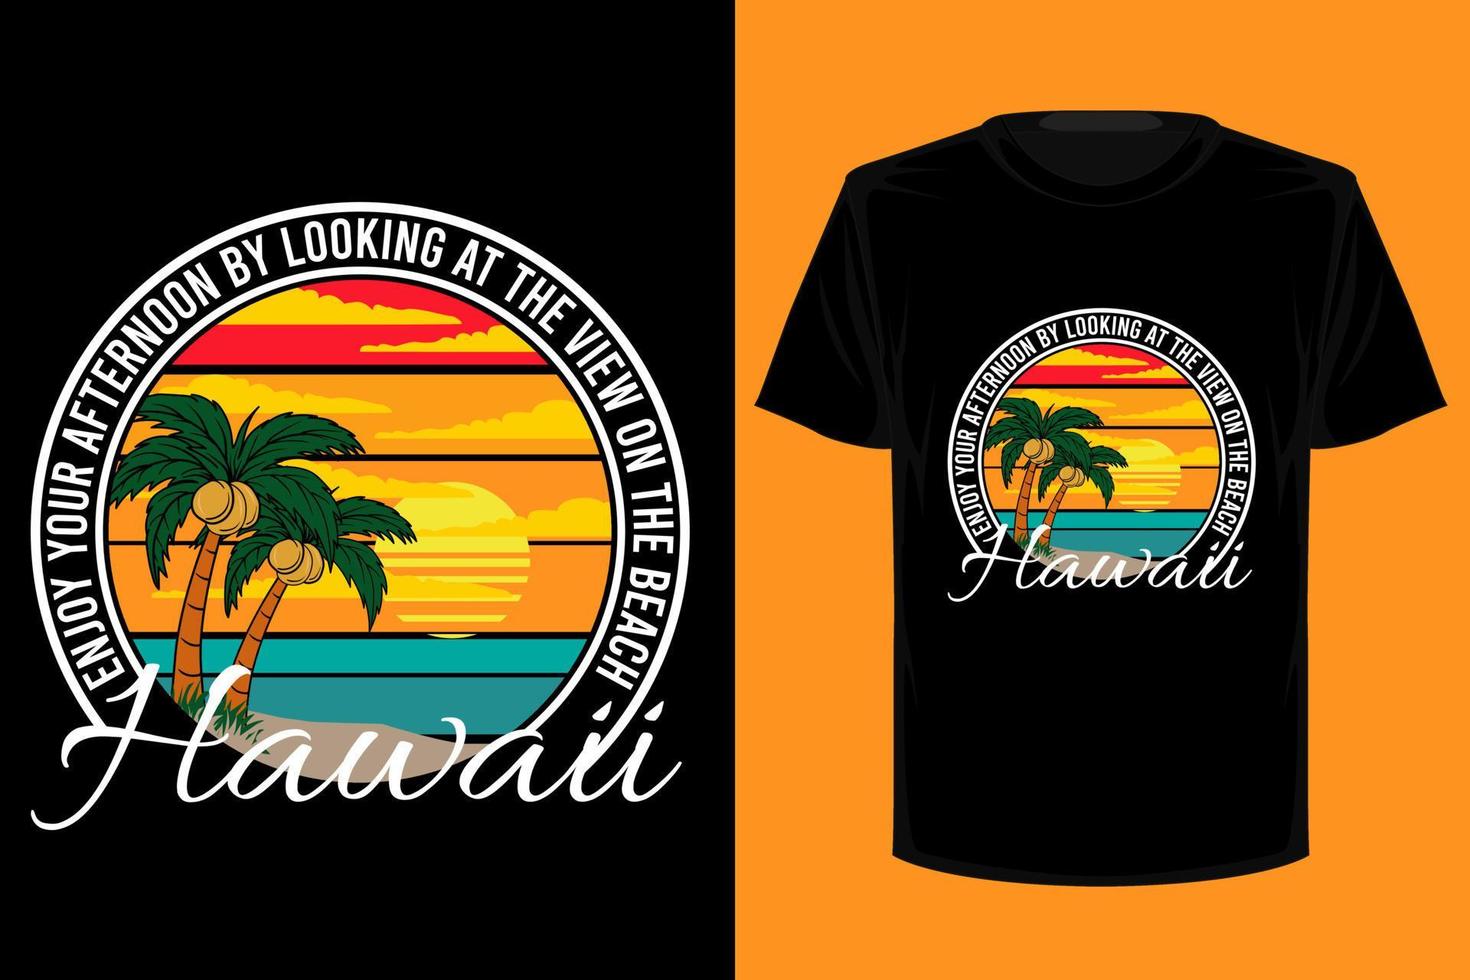 Hawaii retro vintage t shirt design vector